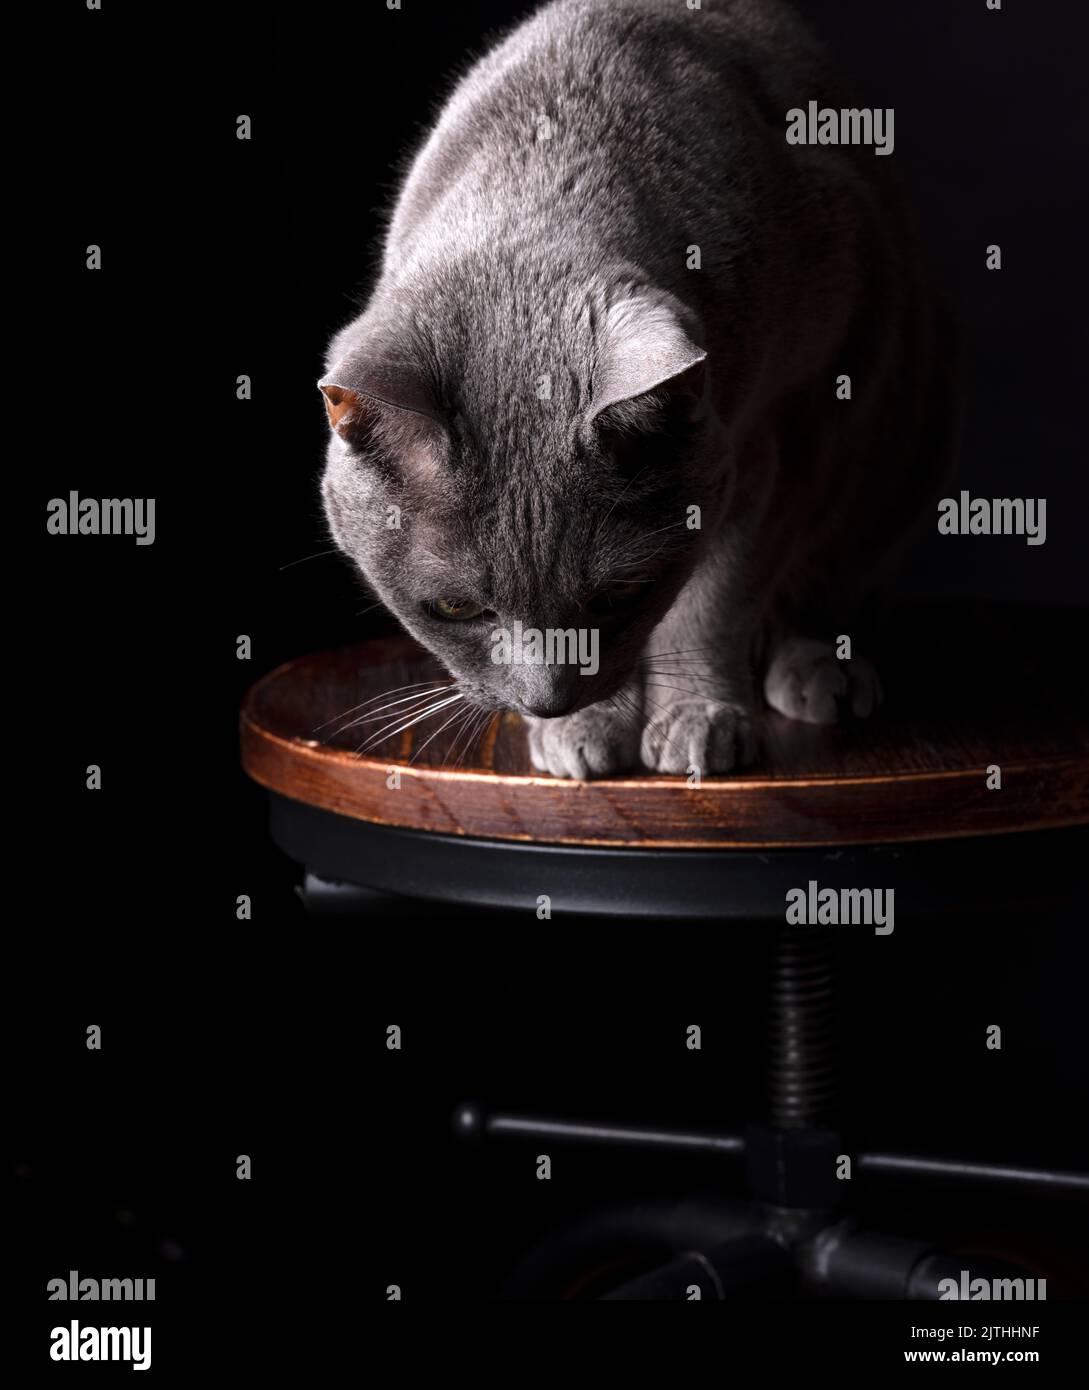 Gato azul ruso Retrato de estudio con fondo negro Foto de stock